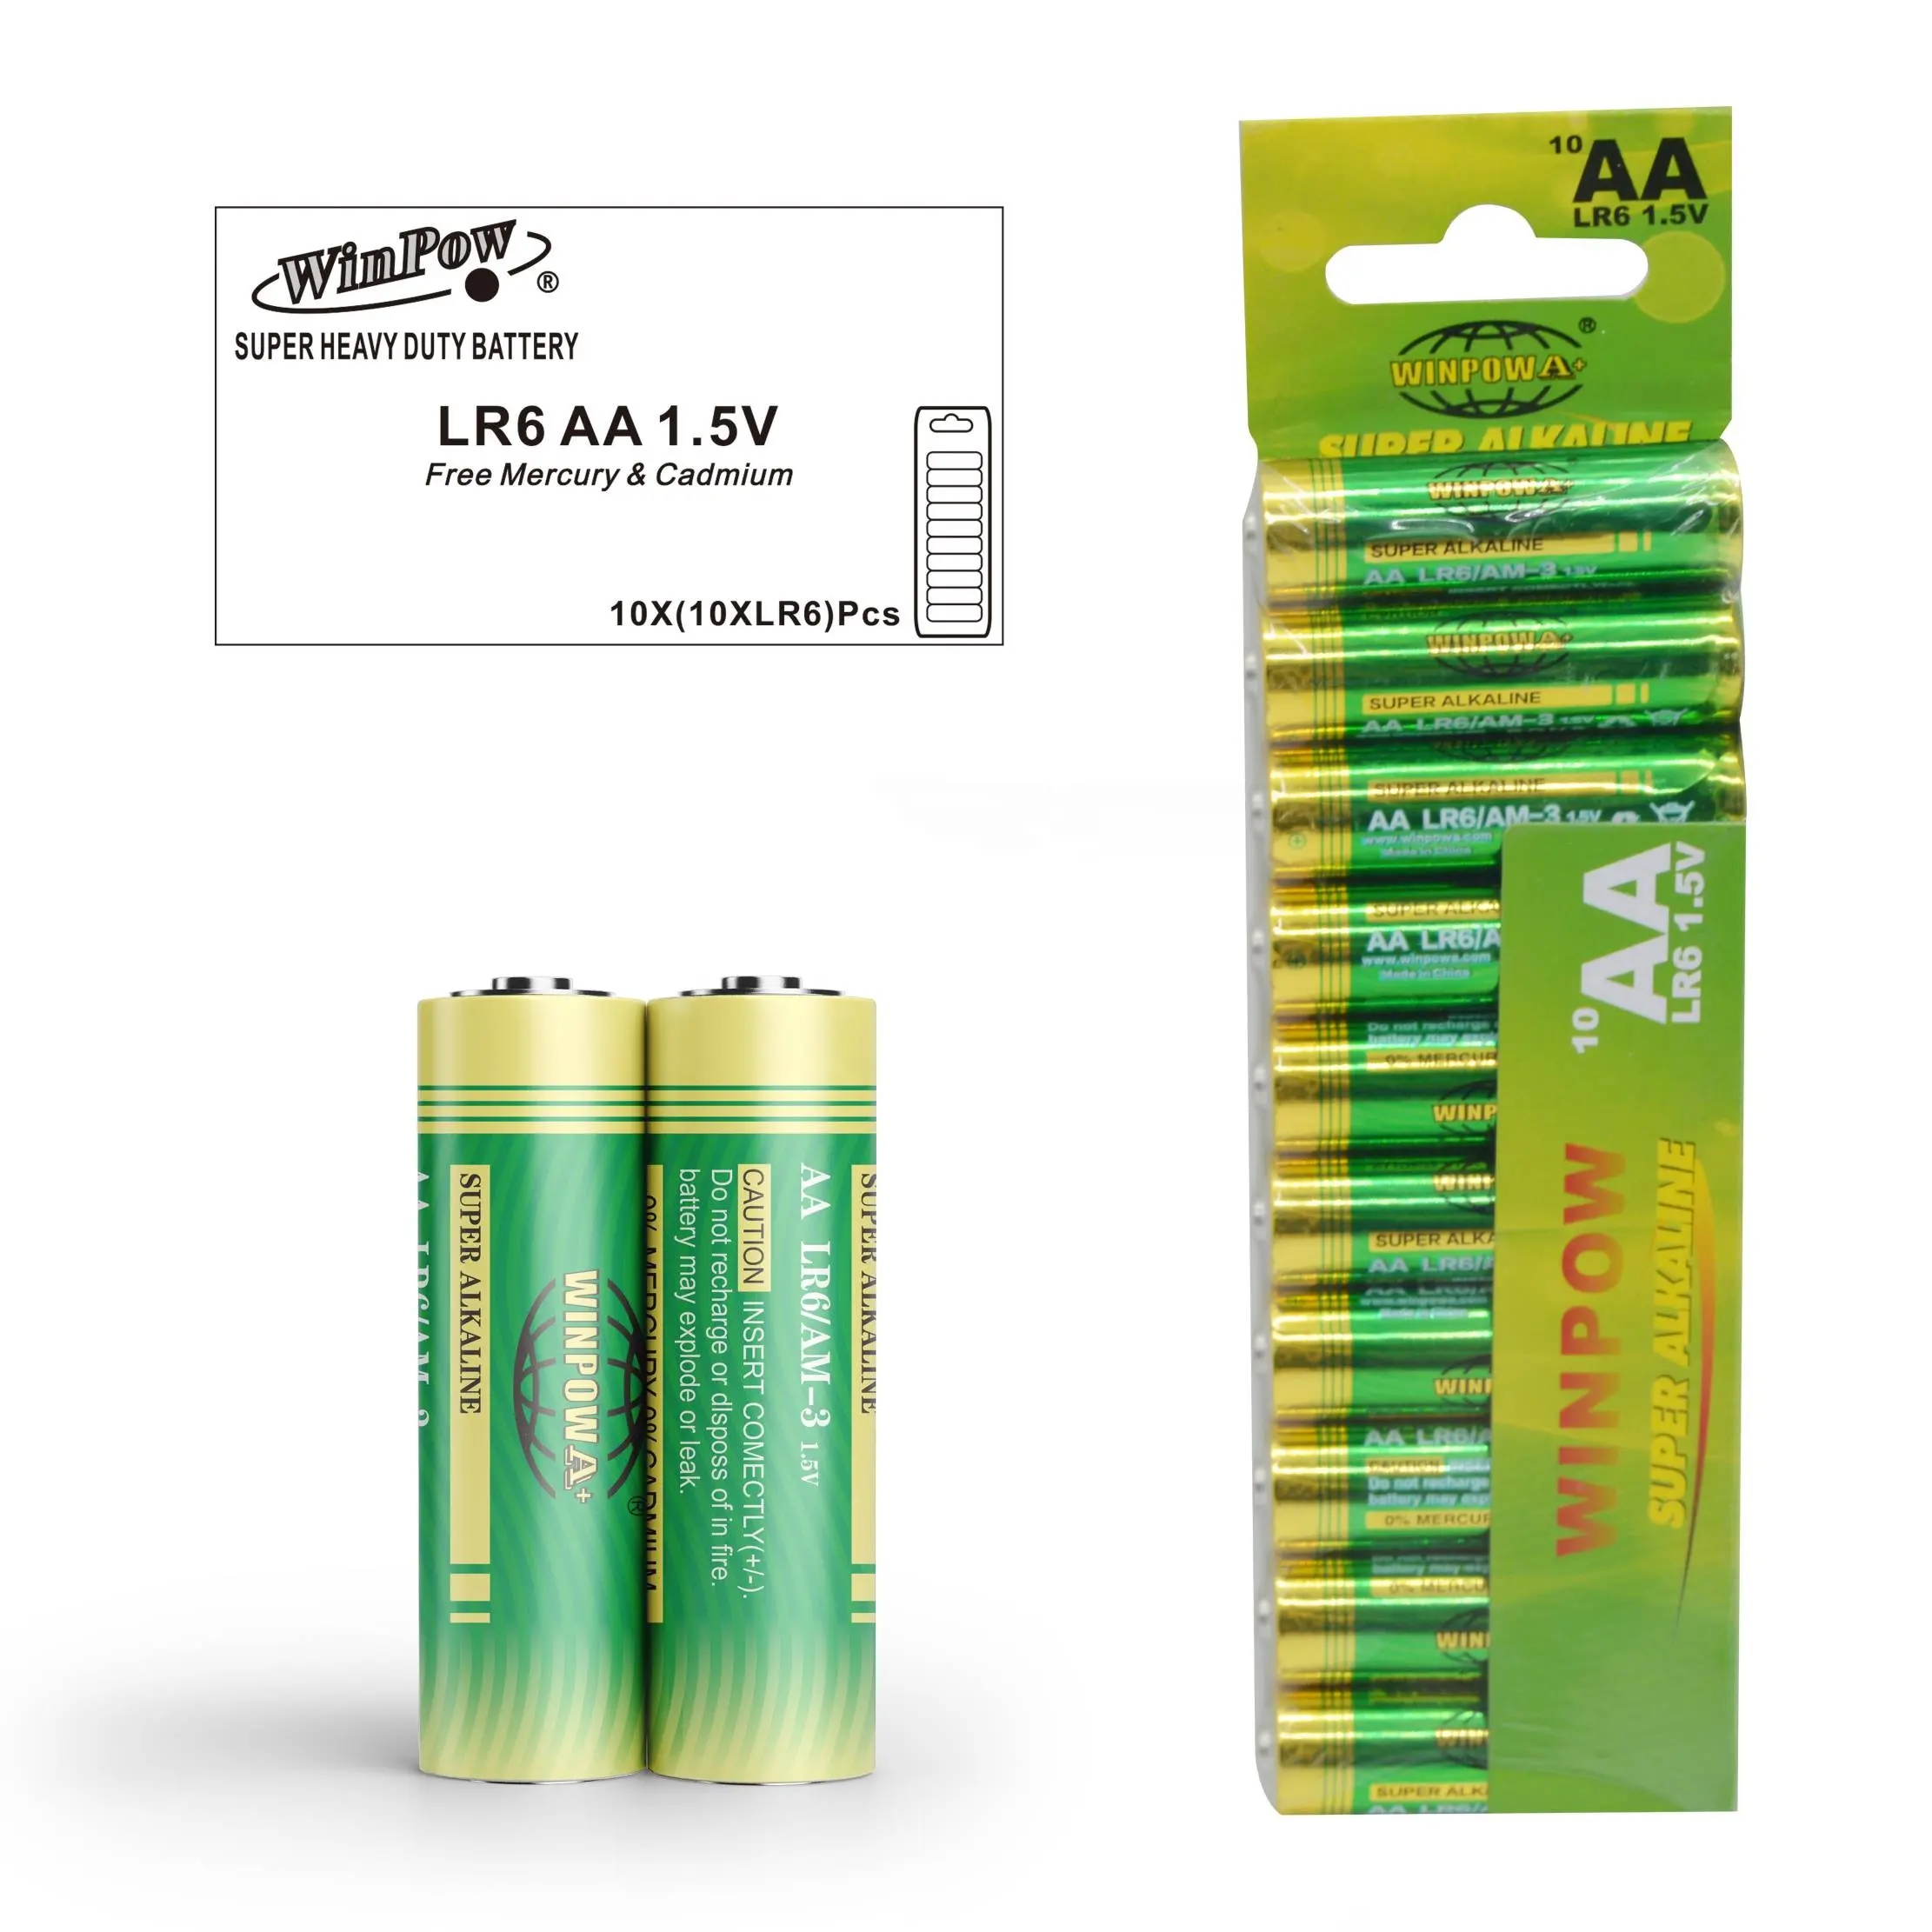 Toy battery alkaline battery 1.5V AA size LR6 2500mAh 340 minutes